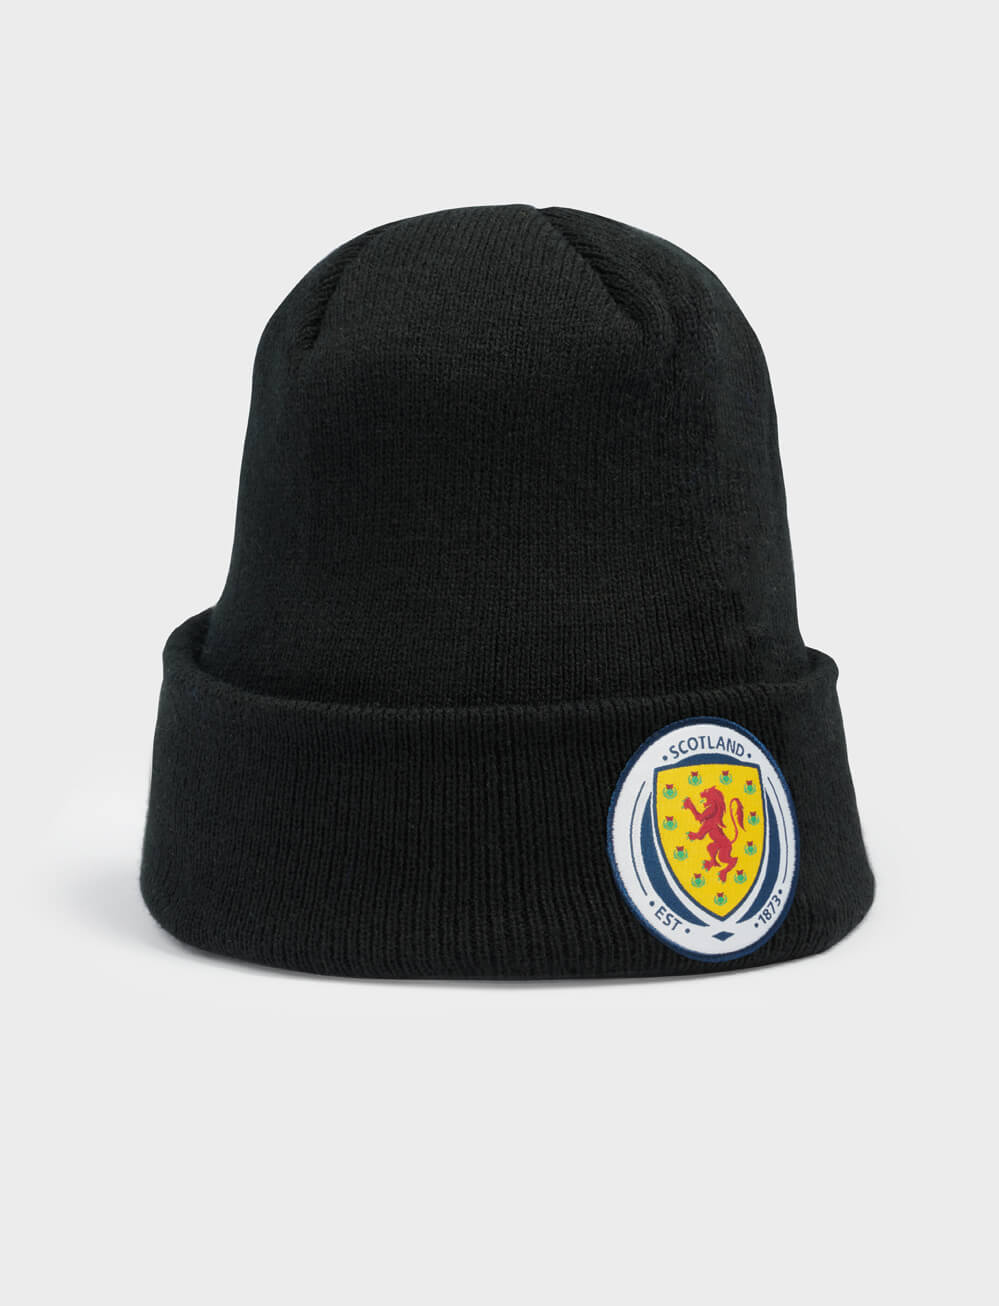 Official Team Scotland Beanie - Black - The World Football Store